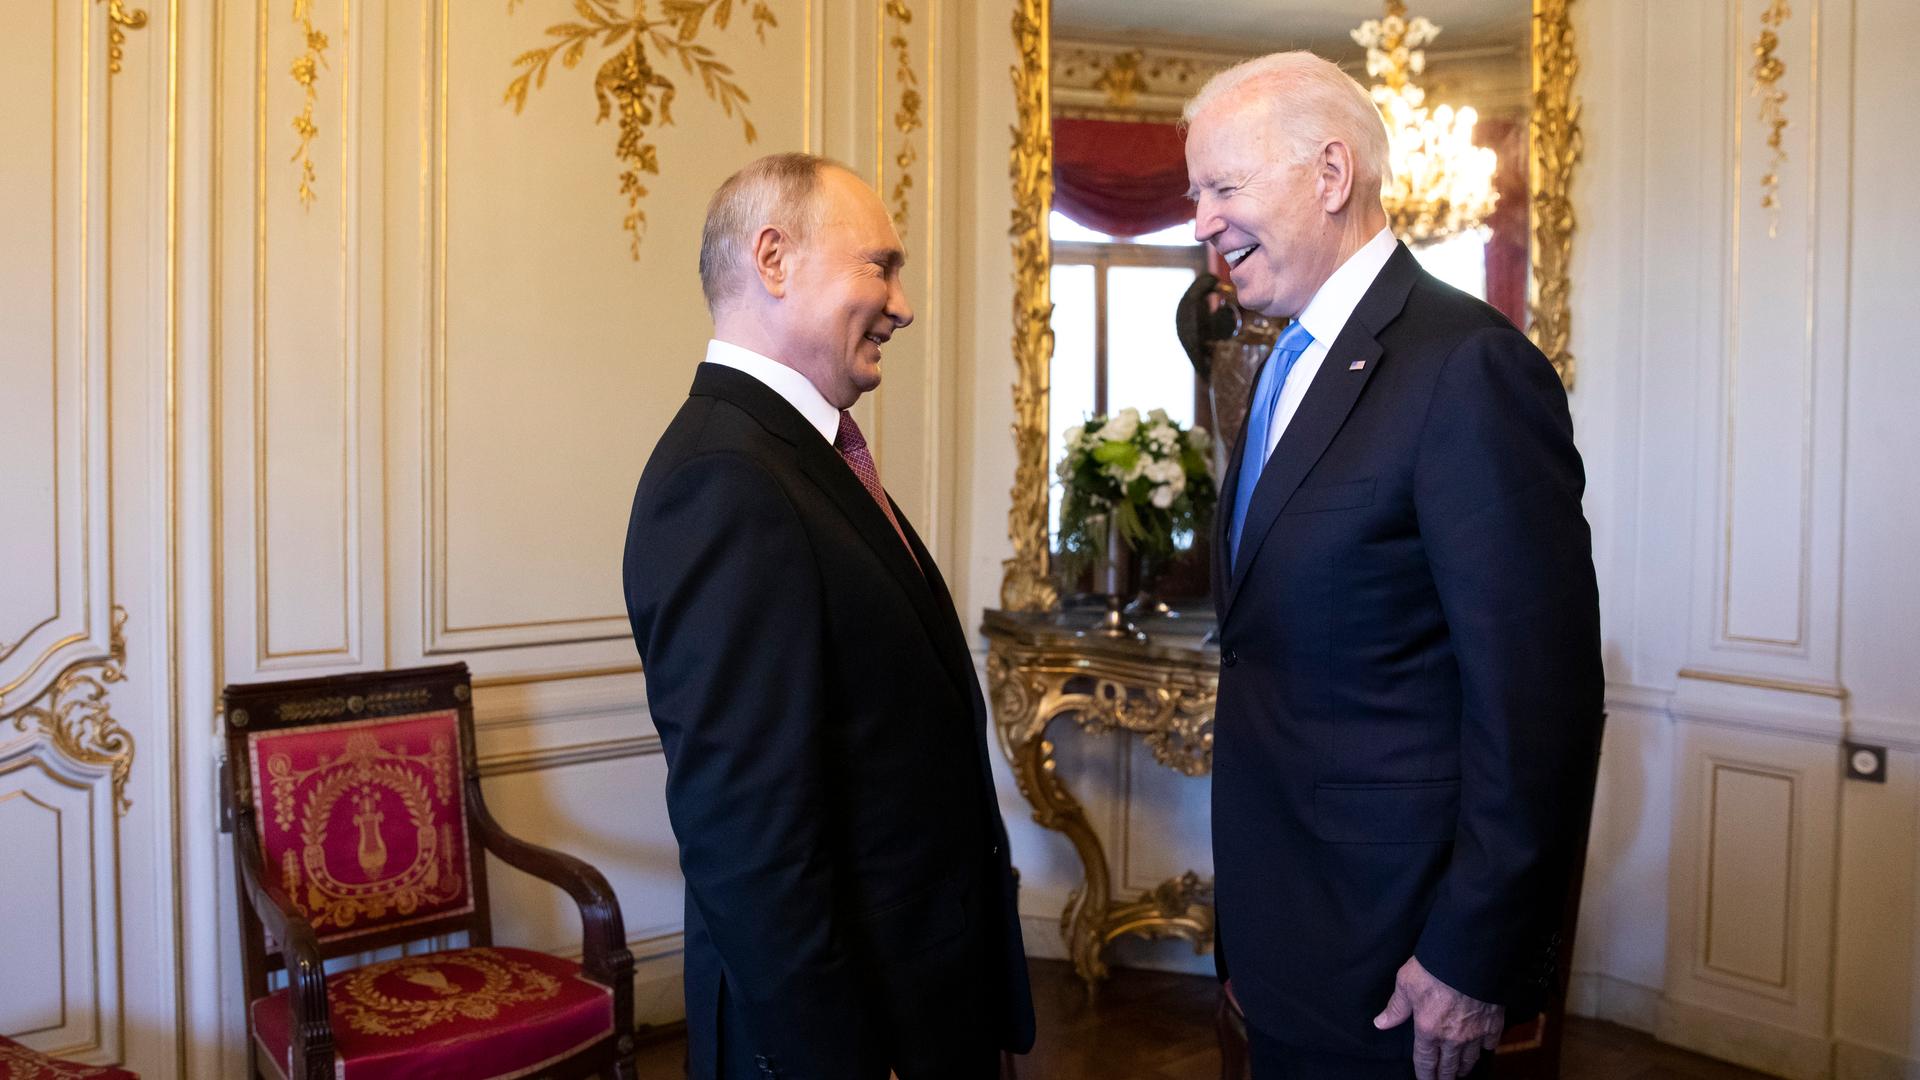 Russian president Vladimir Putin, left, talks with US President Joe Biden, right, during the US-Russia summit in Geneva, Switzerland, Wednesday, June 16, 2021.